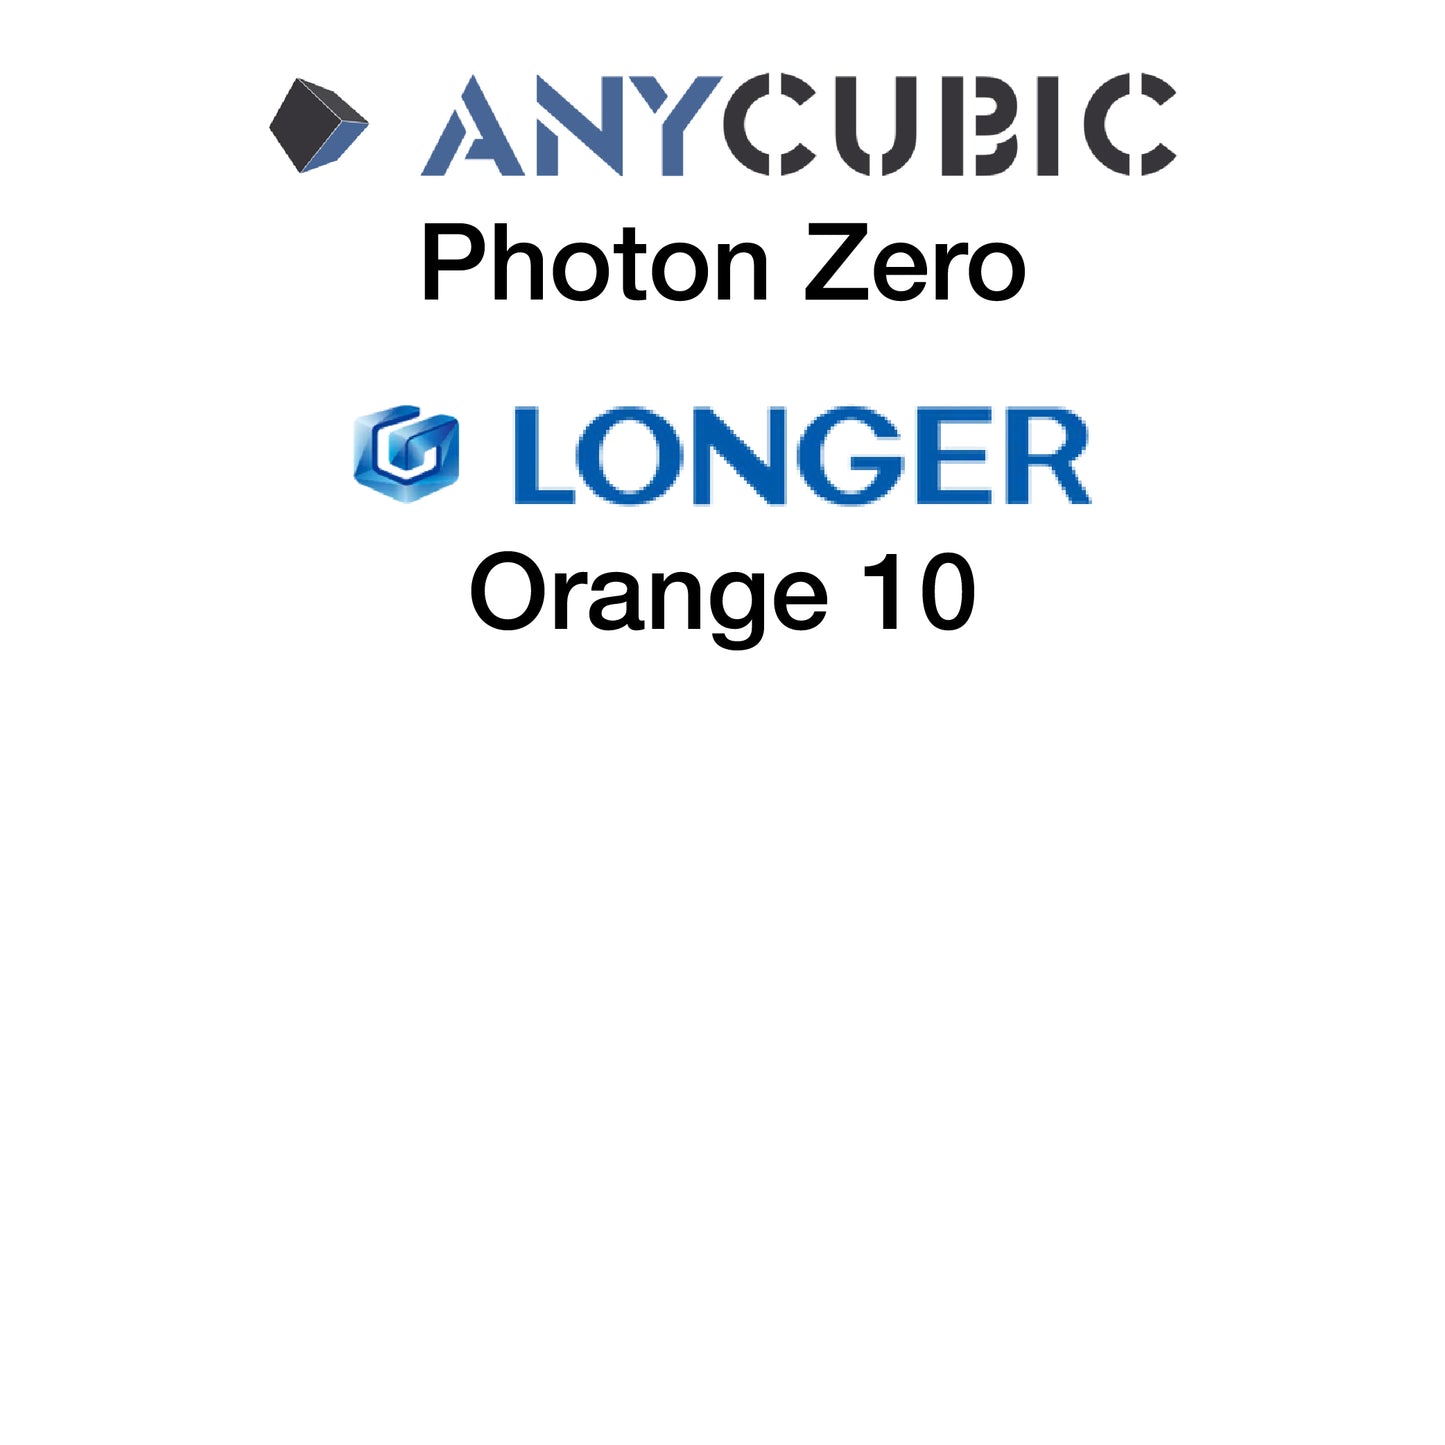 Kit - Anycubic Photon Zero and Longer Orange 10 - 102 x 59